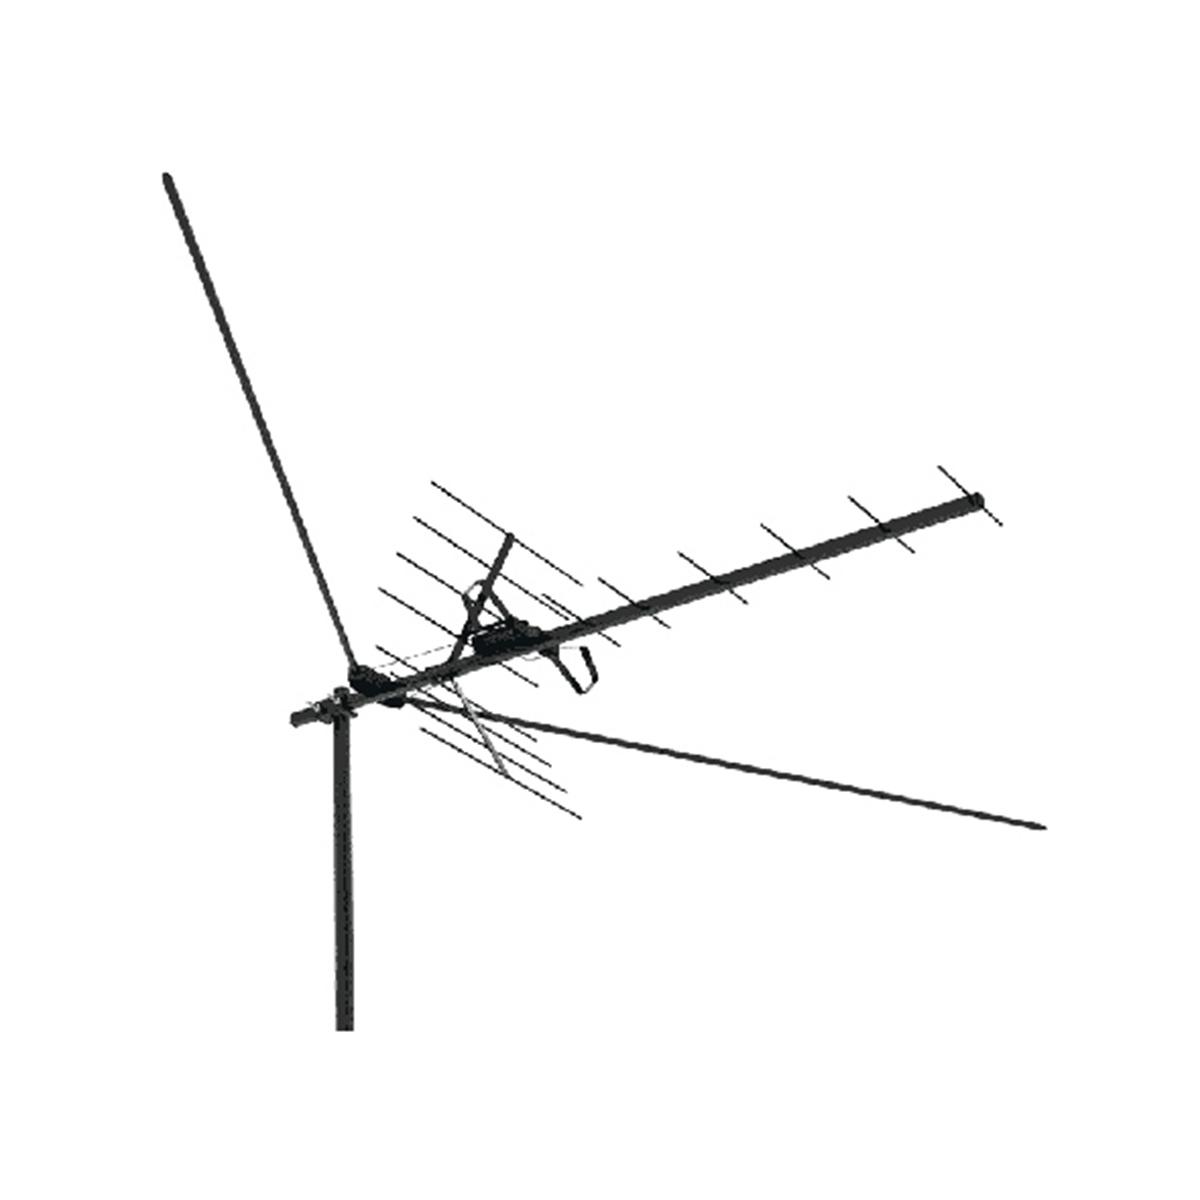 Пассивная антенна для телевизора. Антенна супер Дачник an 830a. Антенна Lumax da2505p. Антенна Дельта h1181a-12v. Антенна gal an-830a/y.